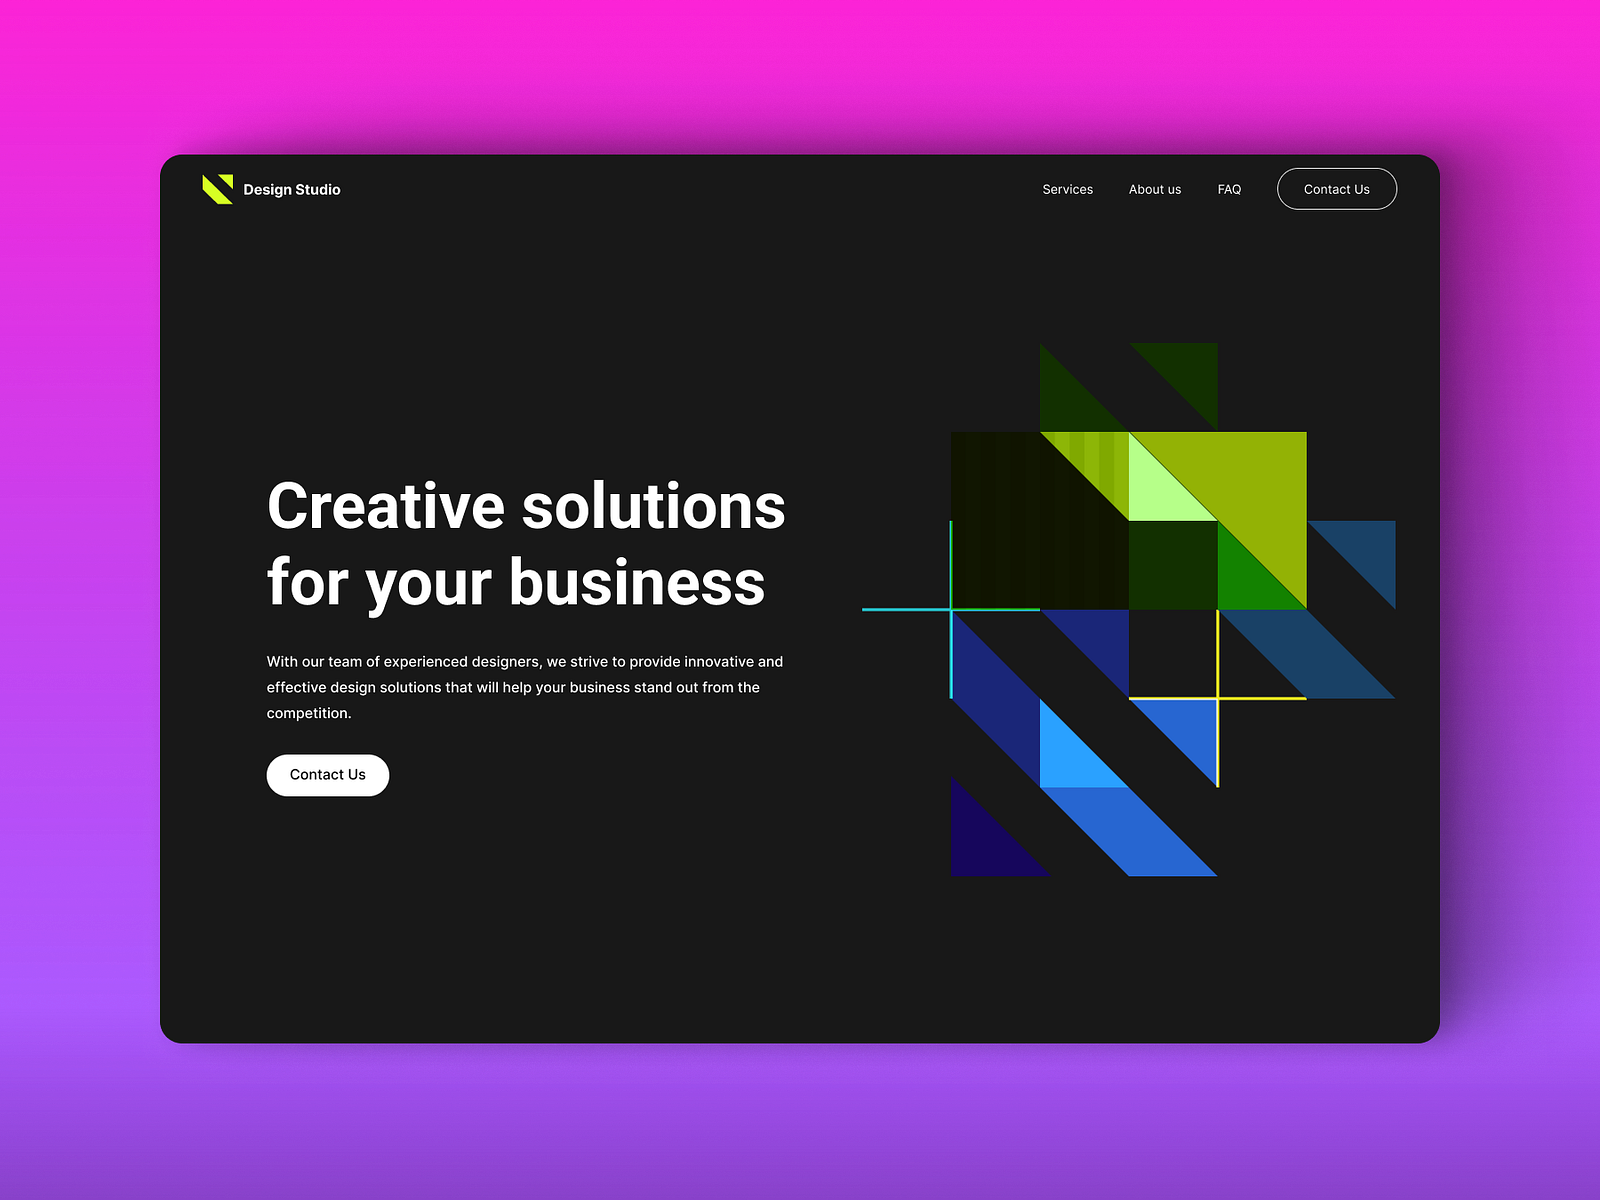 design-studio-website-by-iryna-stetsenko-yershova-on-dribbble